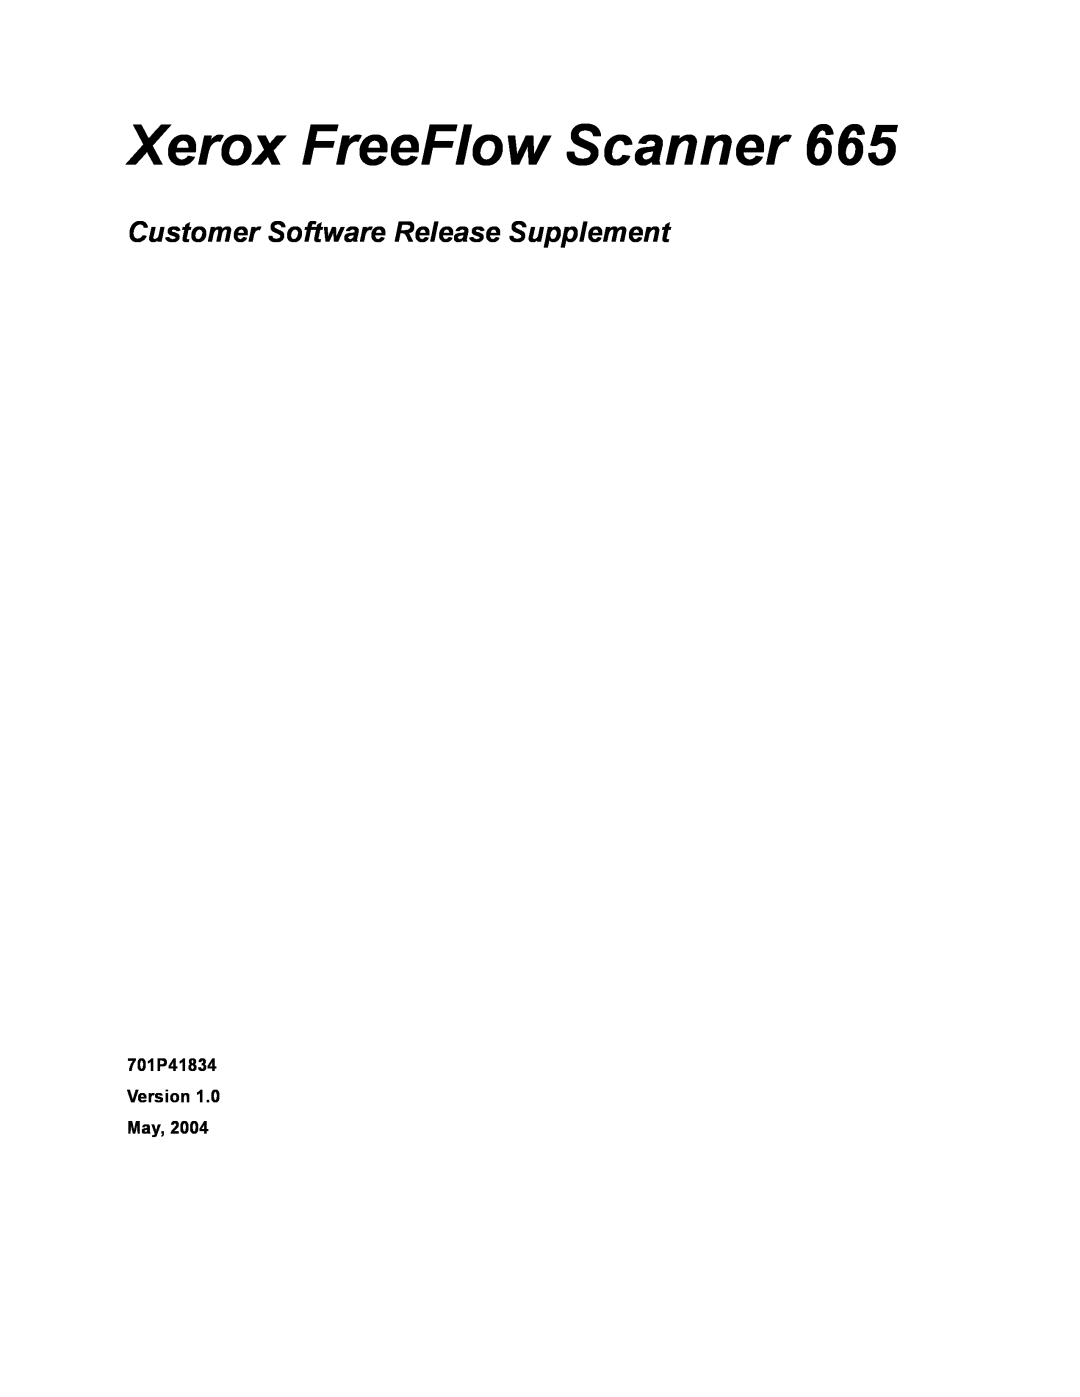 Xerox 701P41834 manual Xerox FreeFlow Scanner, Customer Software Release Supplement 